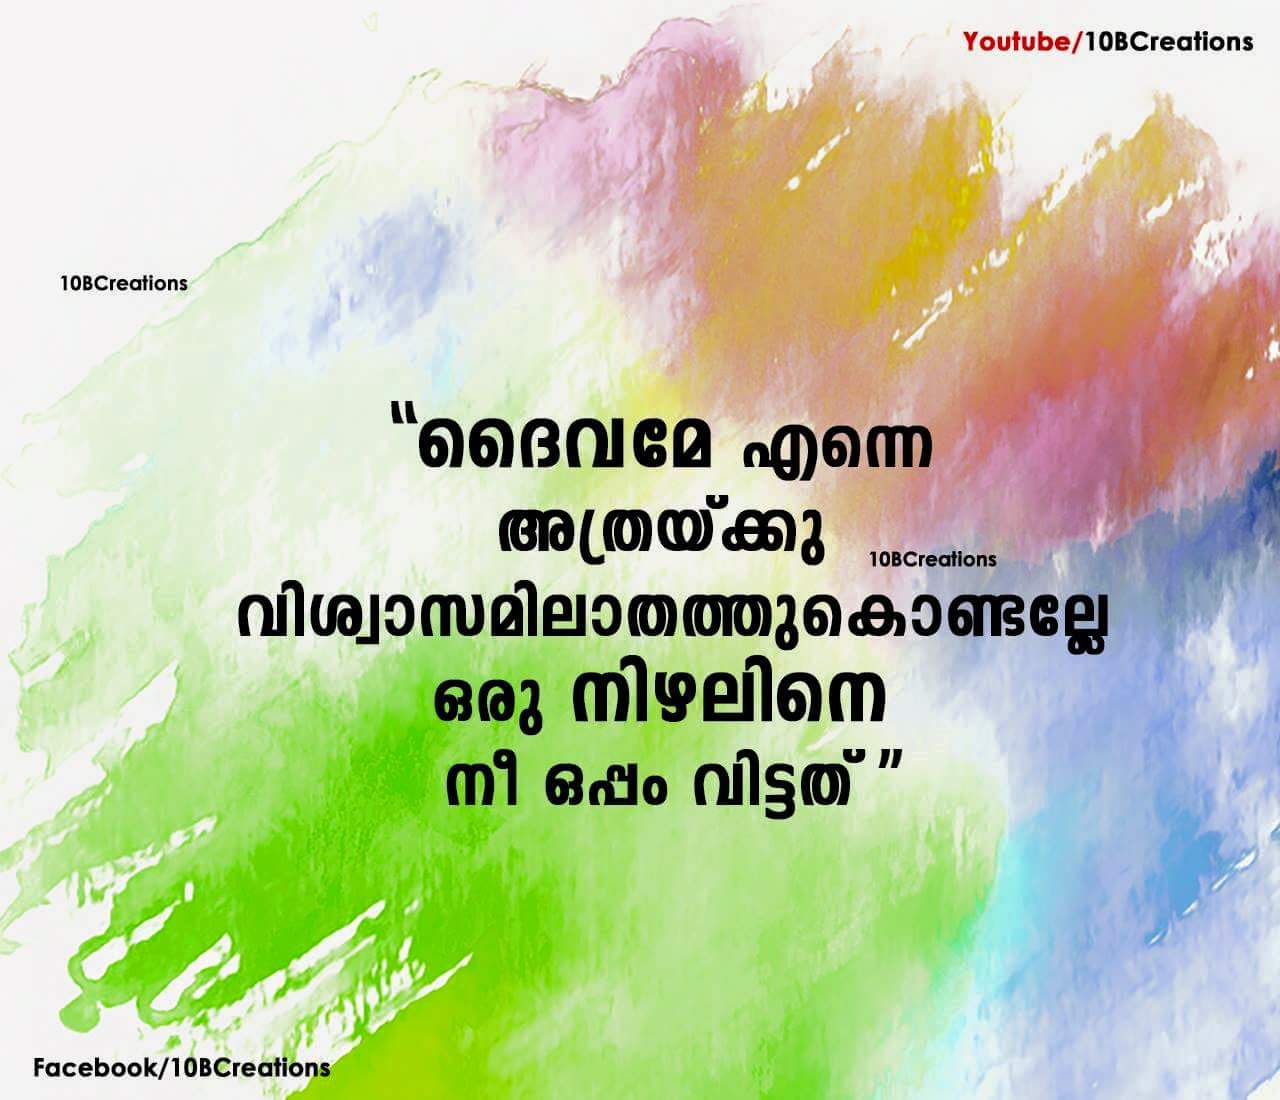 Malayalam Status New 2017 Malayalam Scraps Malayalam Quotes Malayalam Greetings Status Sms Wishes Malayalam Cover Photos Facebook Timeline Cover Photos Wallpaper